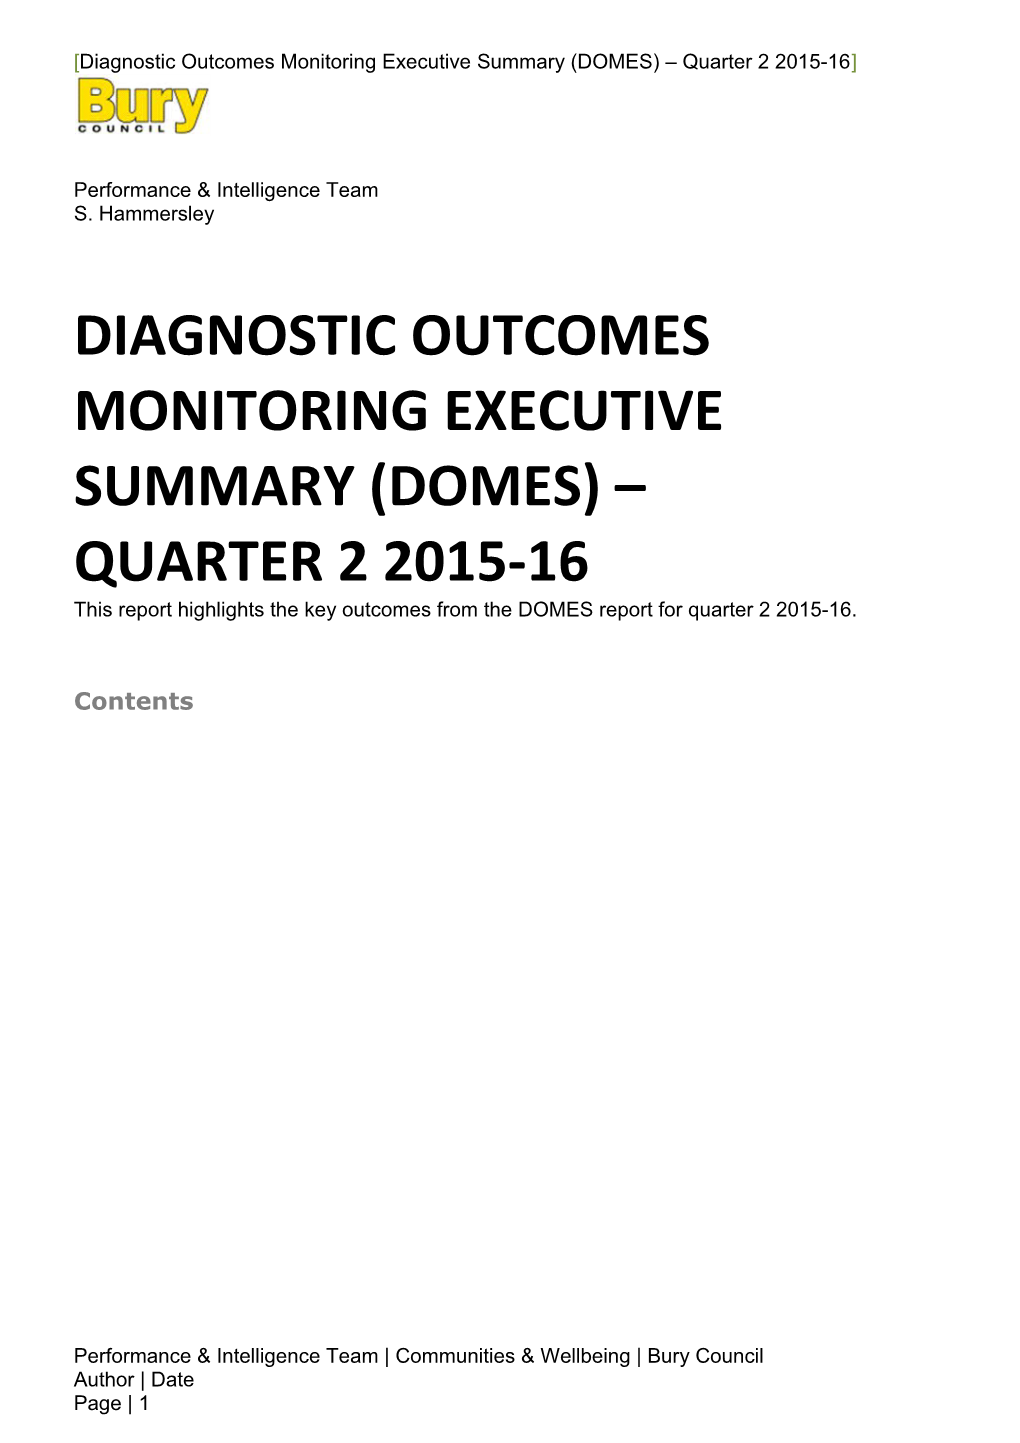 Diagnostic Outcomes Monitoring Executive Summary (DOMES) Quarter 2 2015-16